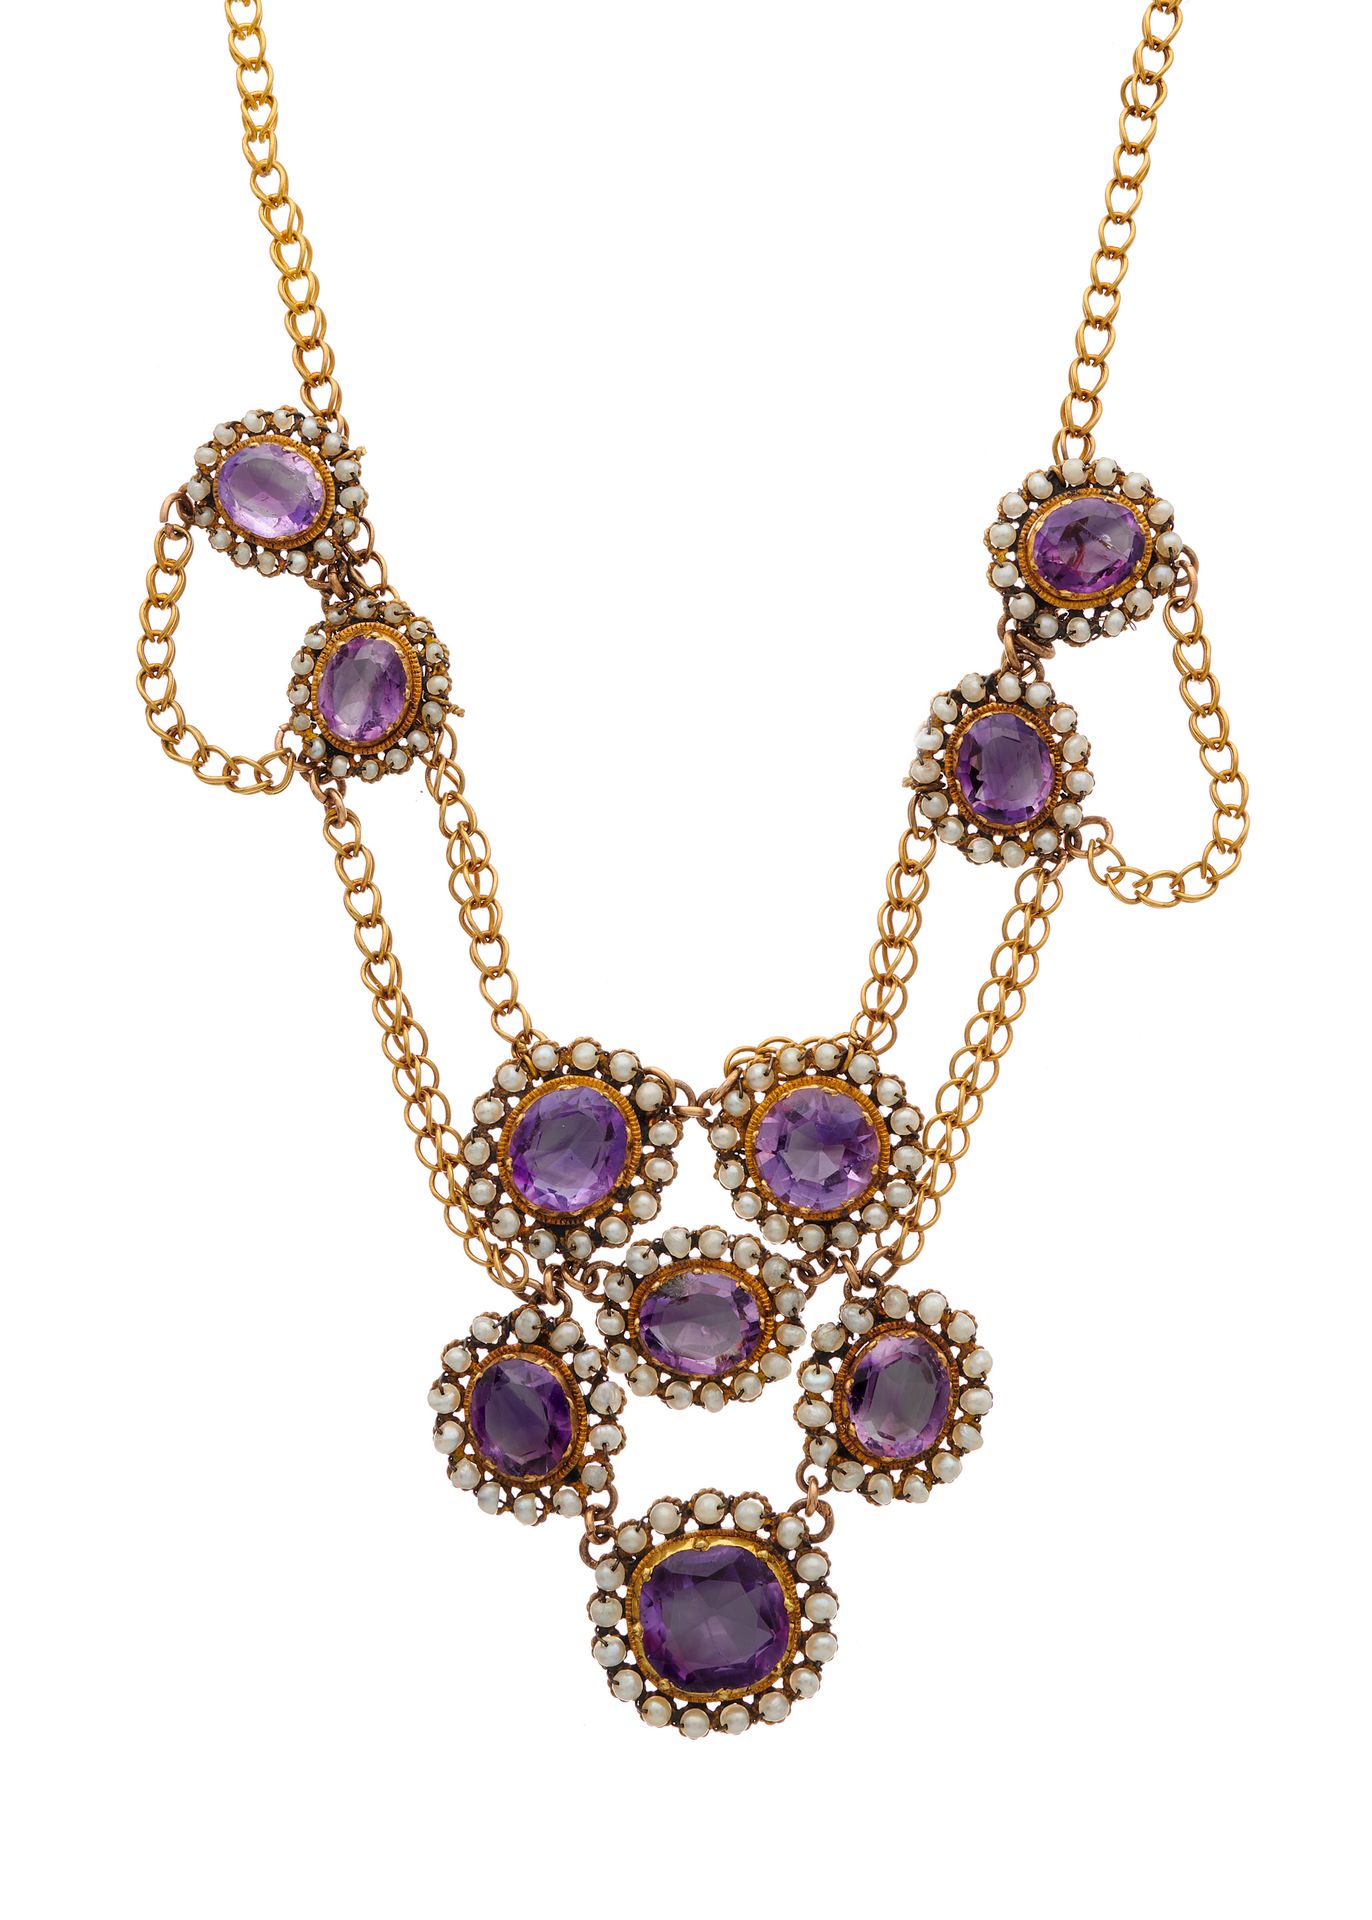 Null 一条19世纪的黄金、紫水晶和籽珍珠簇拥的花环项链，带有类似的推片式扣，长38厘米，重15克 - 整体状况良好 - 紫水晶是一种很好的匹配，中等到深紫色&hellip;